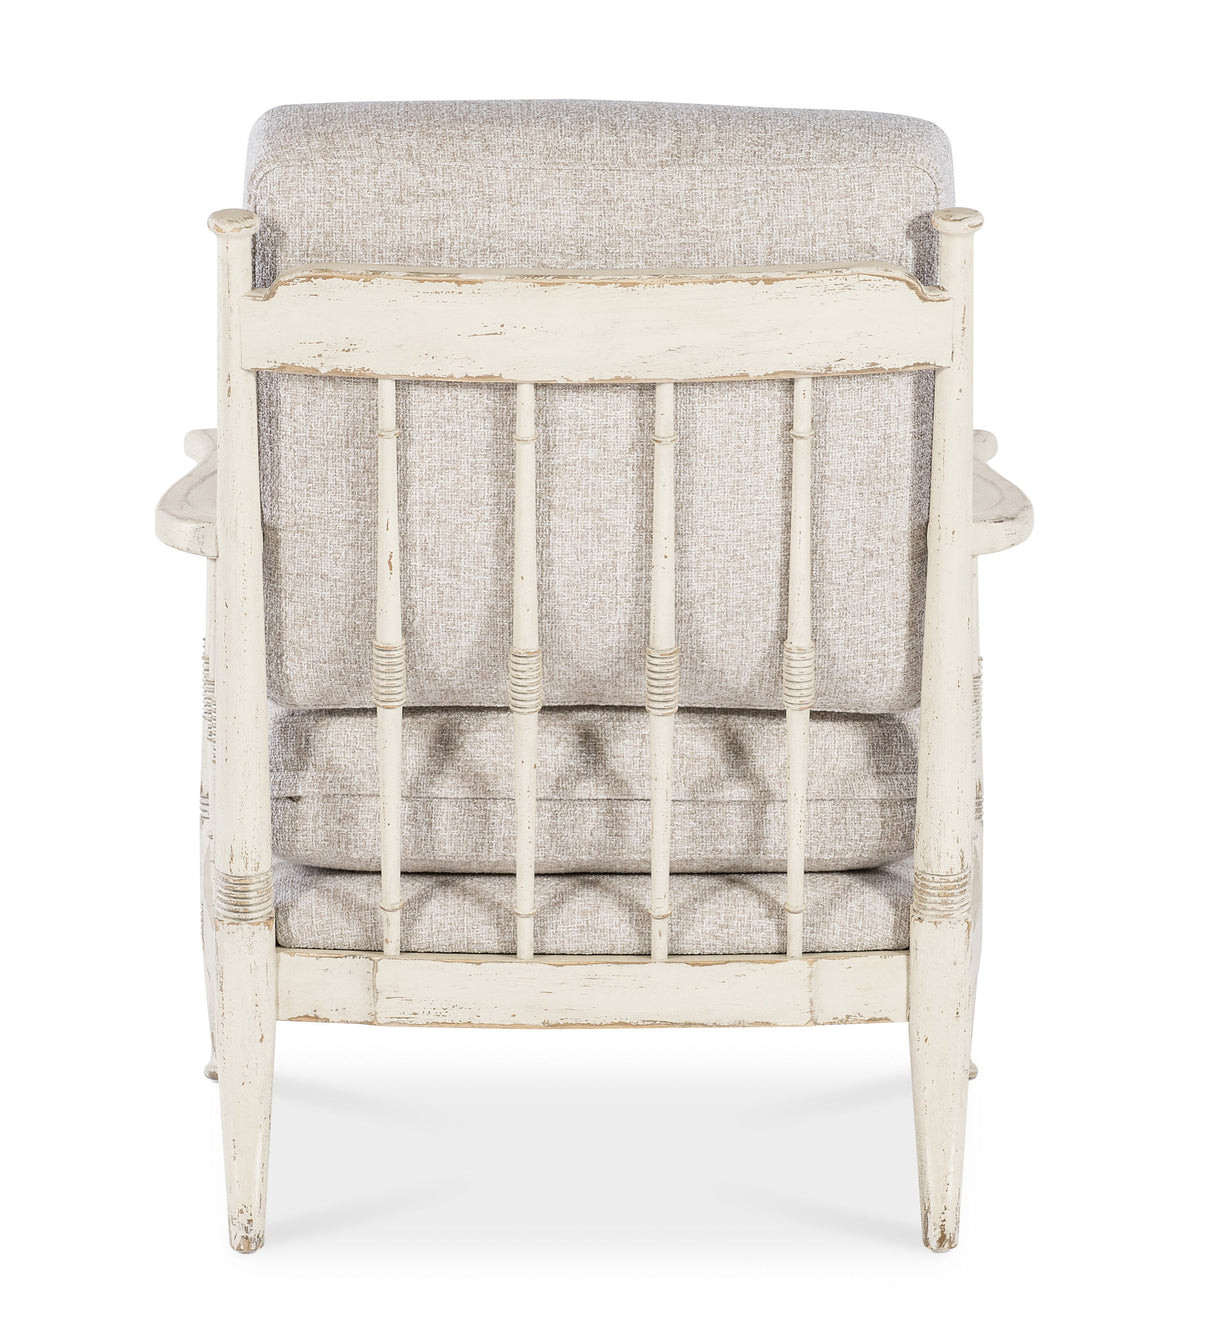 Prairie - Upholstered Chair - White